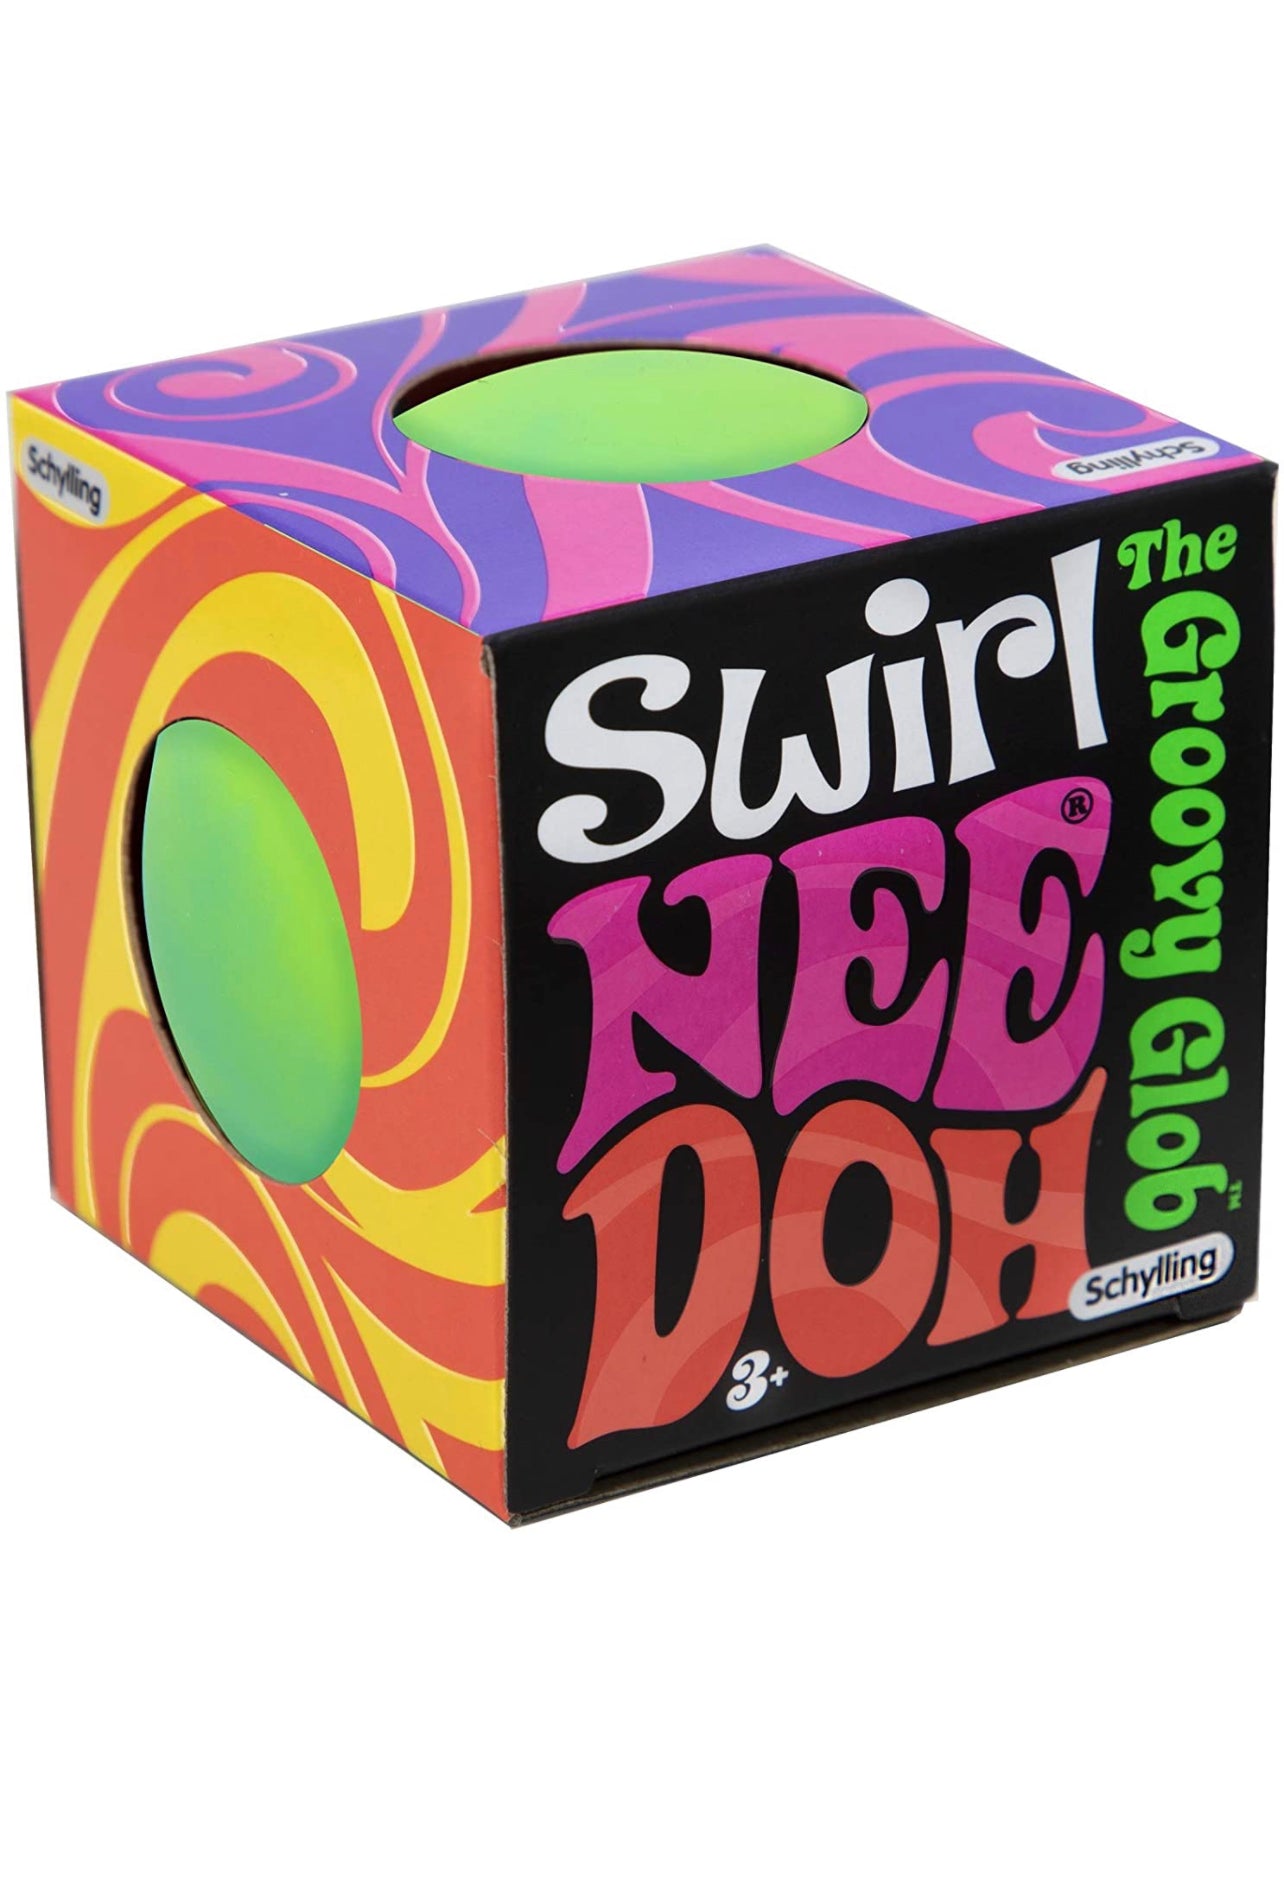 Swirl Nee Doh: assorted colors